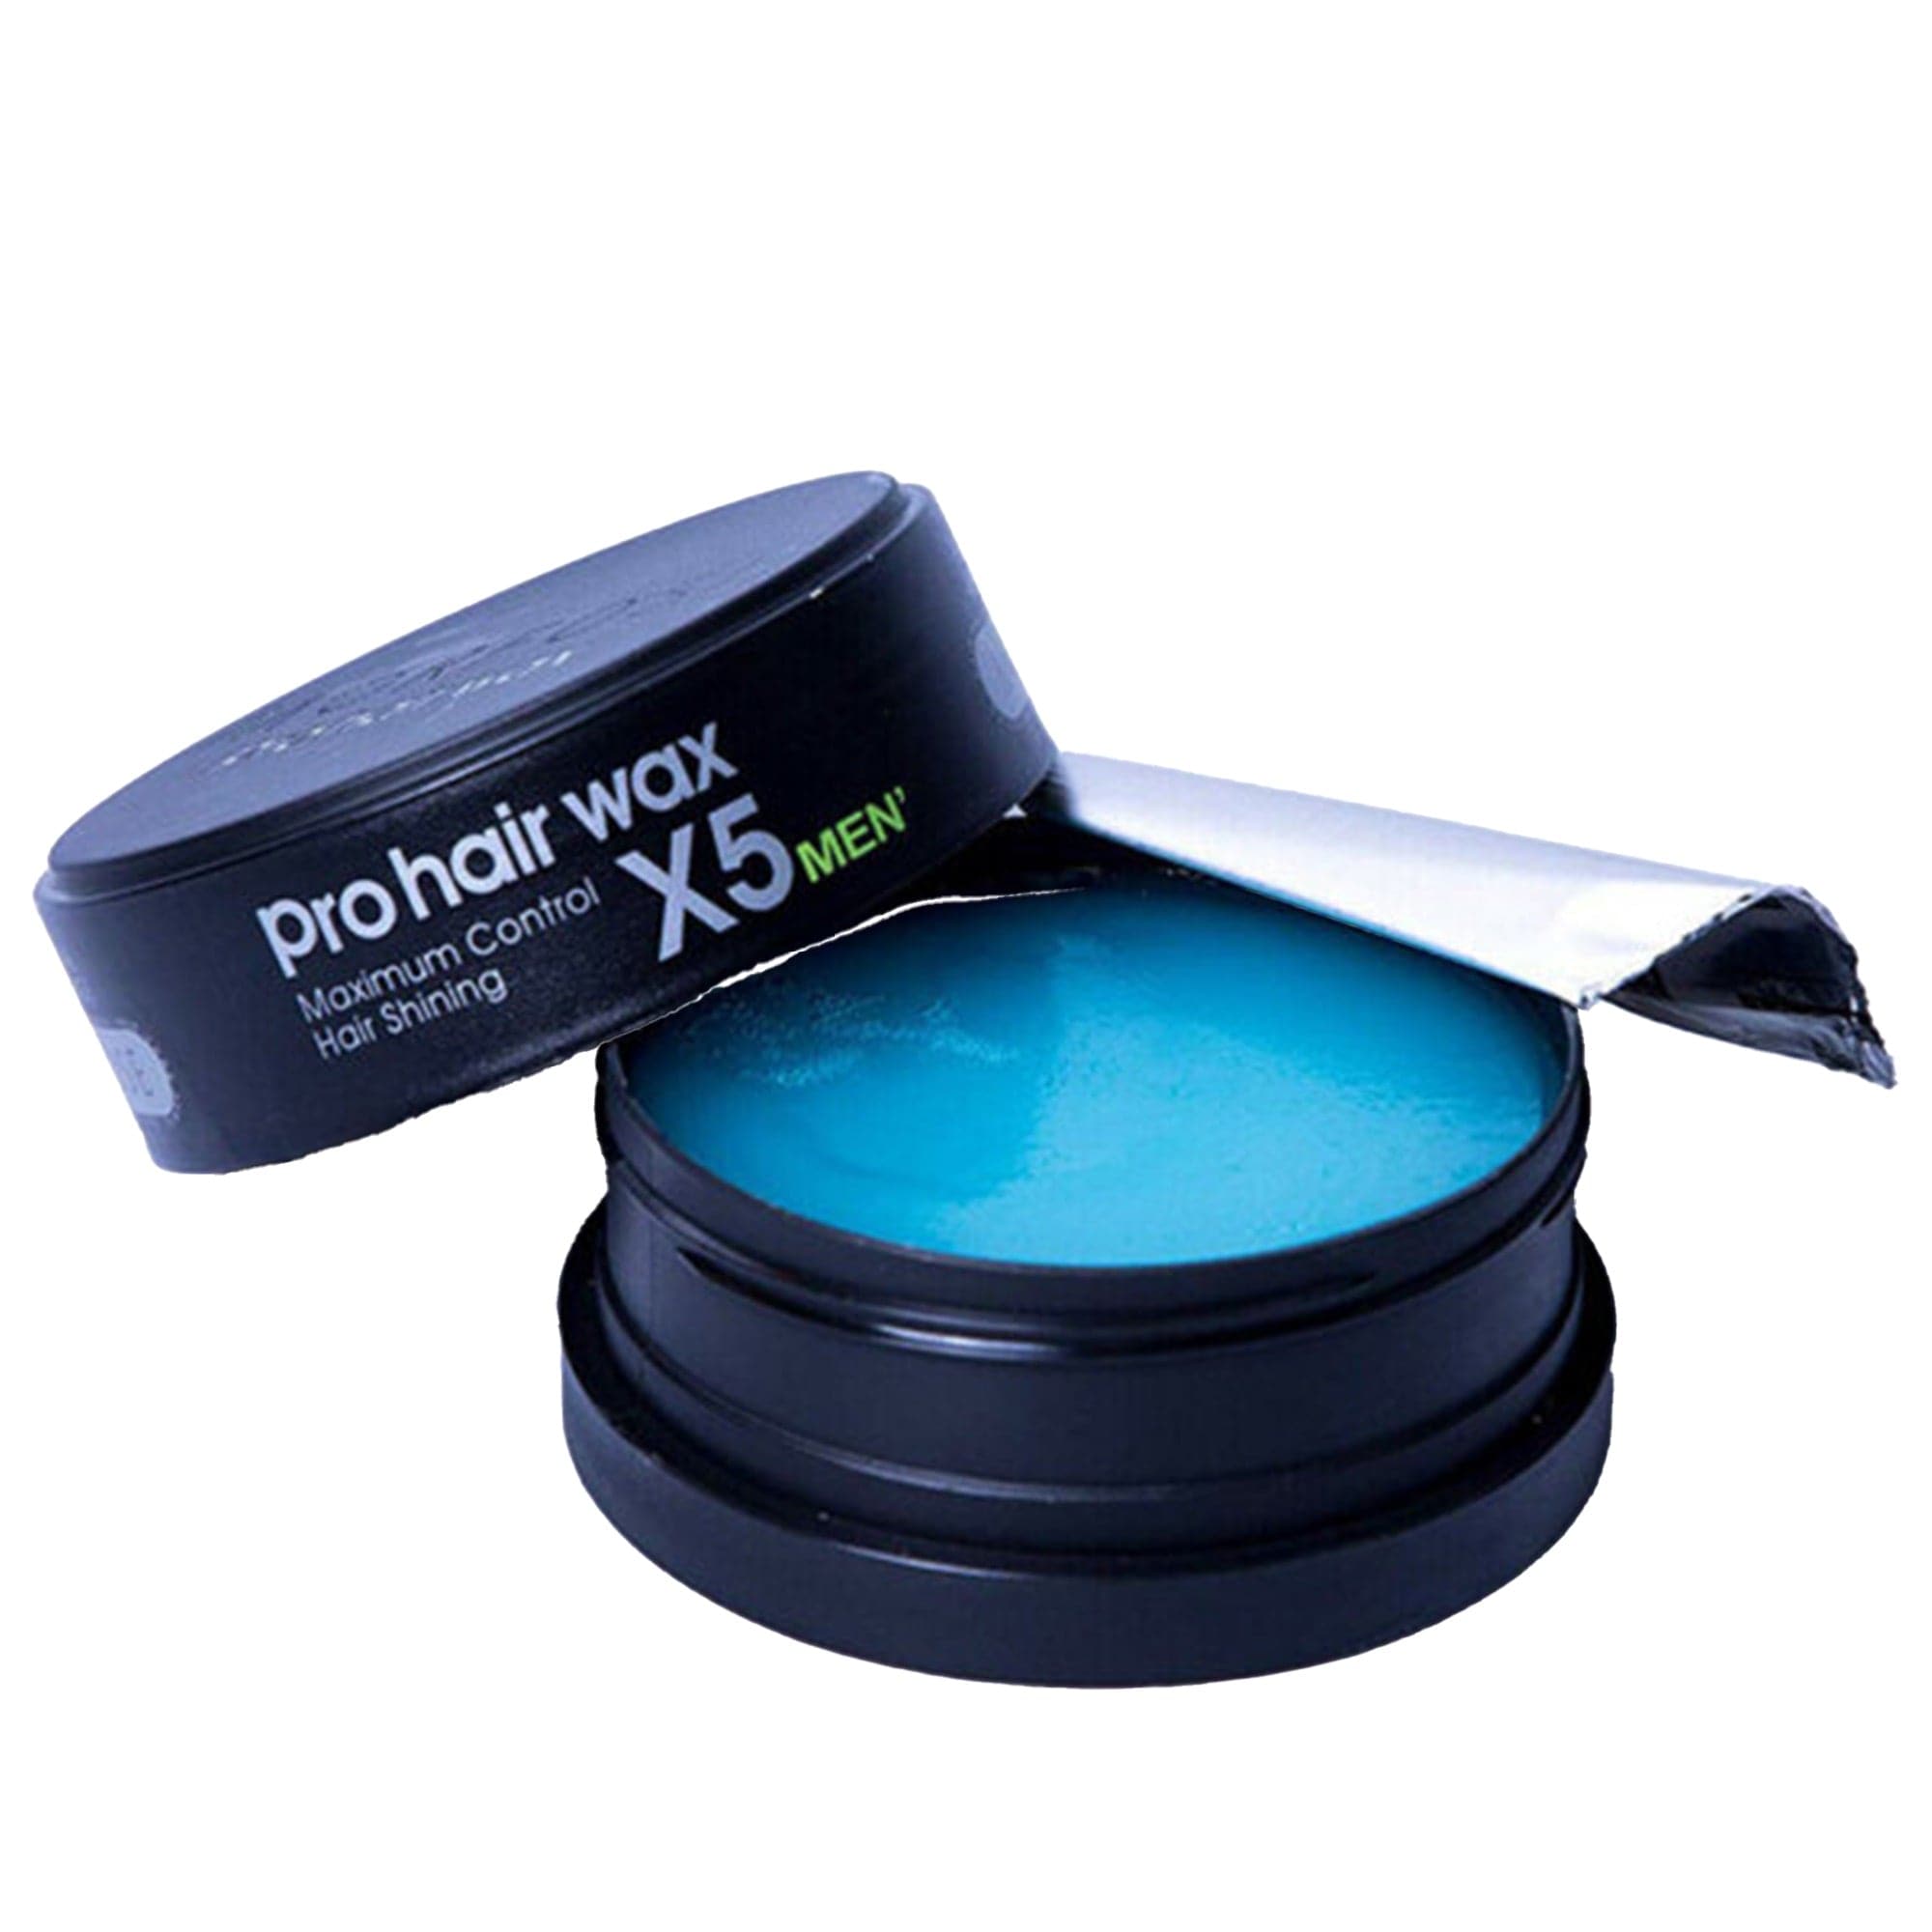 Morfose - Maximum Control Pro Hair Wax X5 150ml